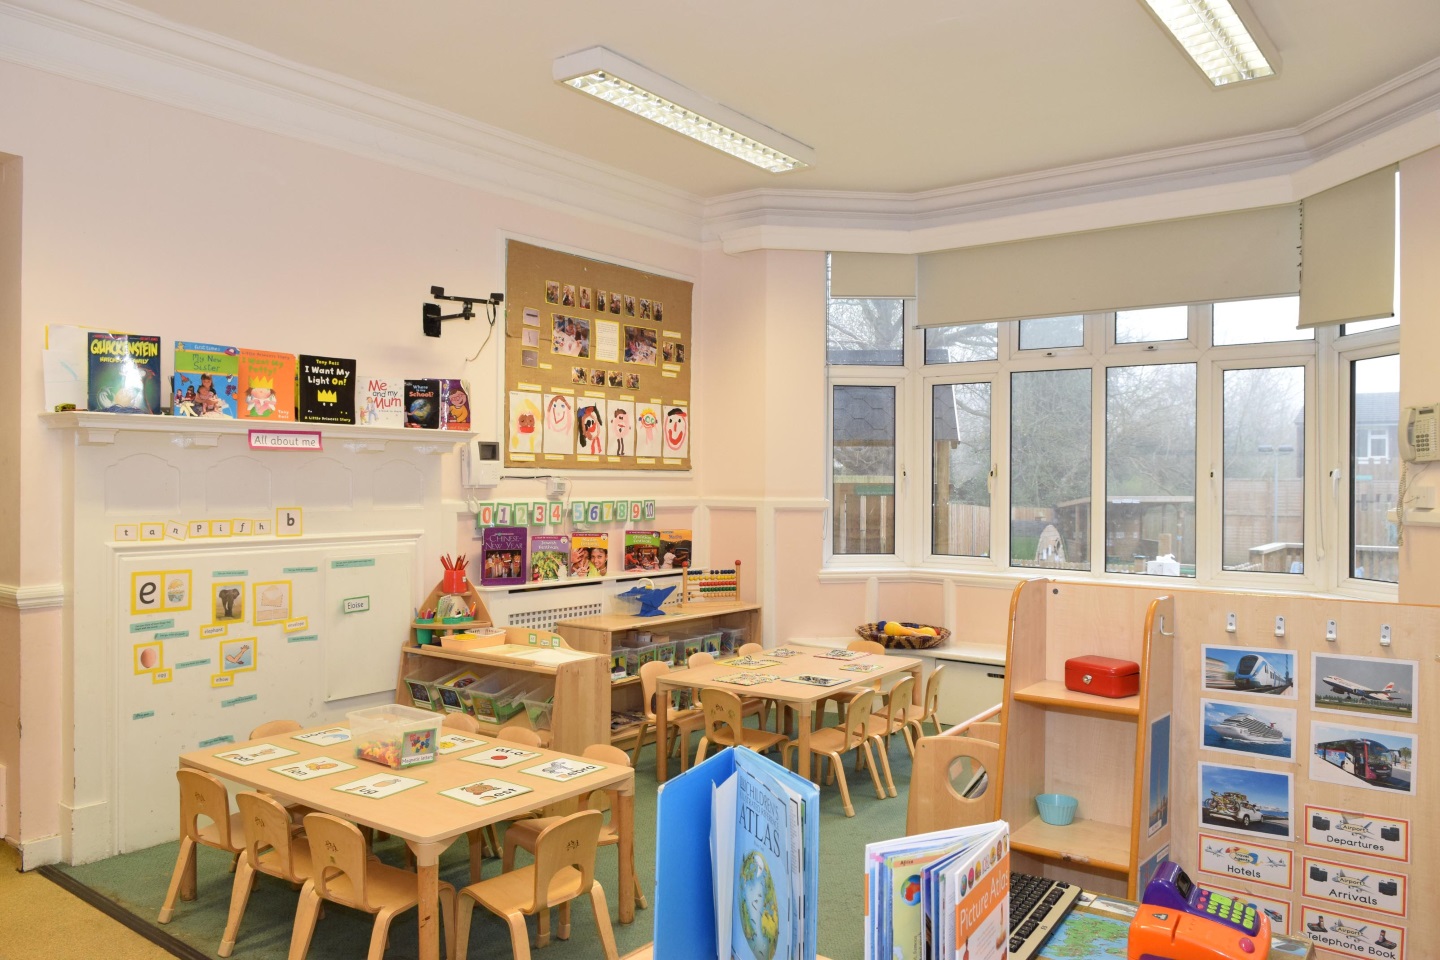 Bright Horizons Surbiton Day Nursery and Preschool Surrey 020 3906 6567